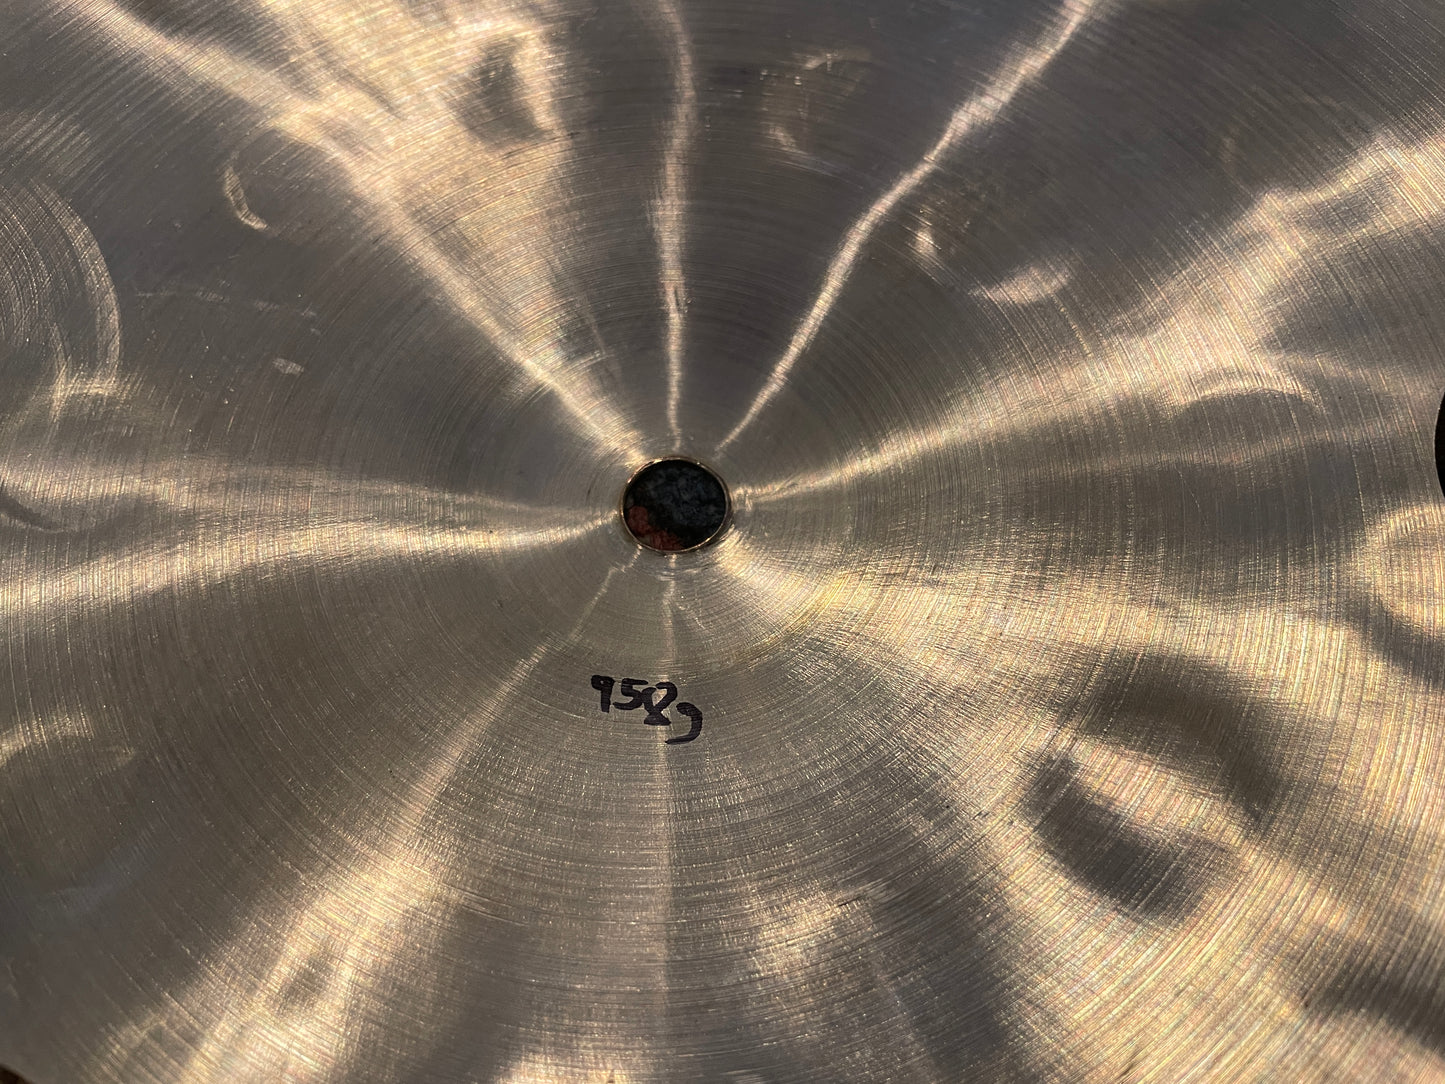 16" Diril Primitive China Cymbal 958g